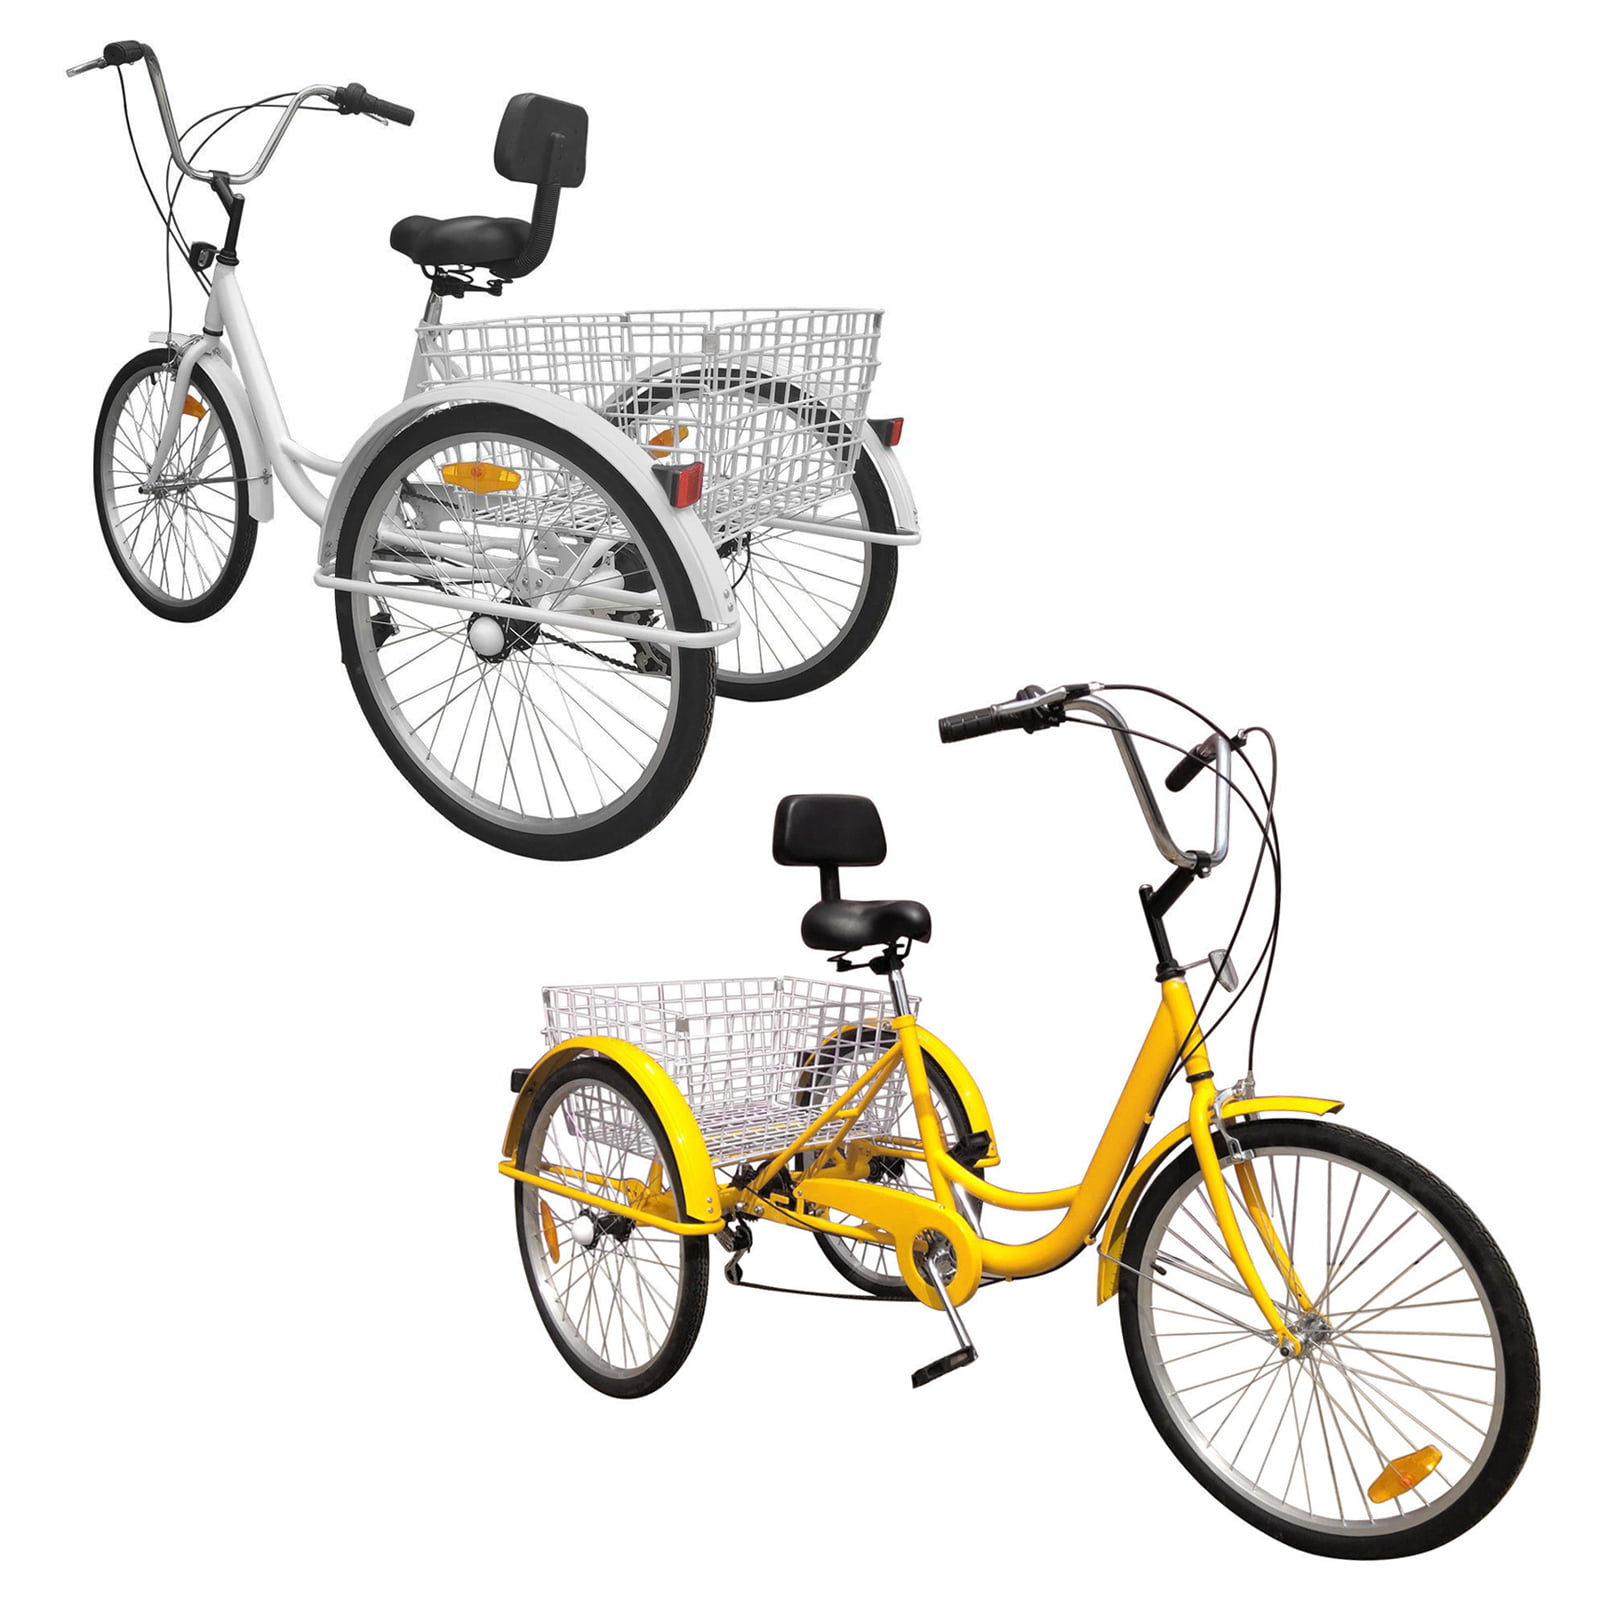 24'' 3 Wheel Adult Tricycle Trike Bicycle Basket Seat Trike Cruise with lamp 